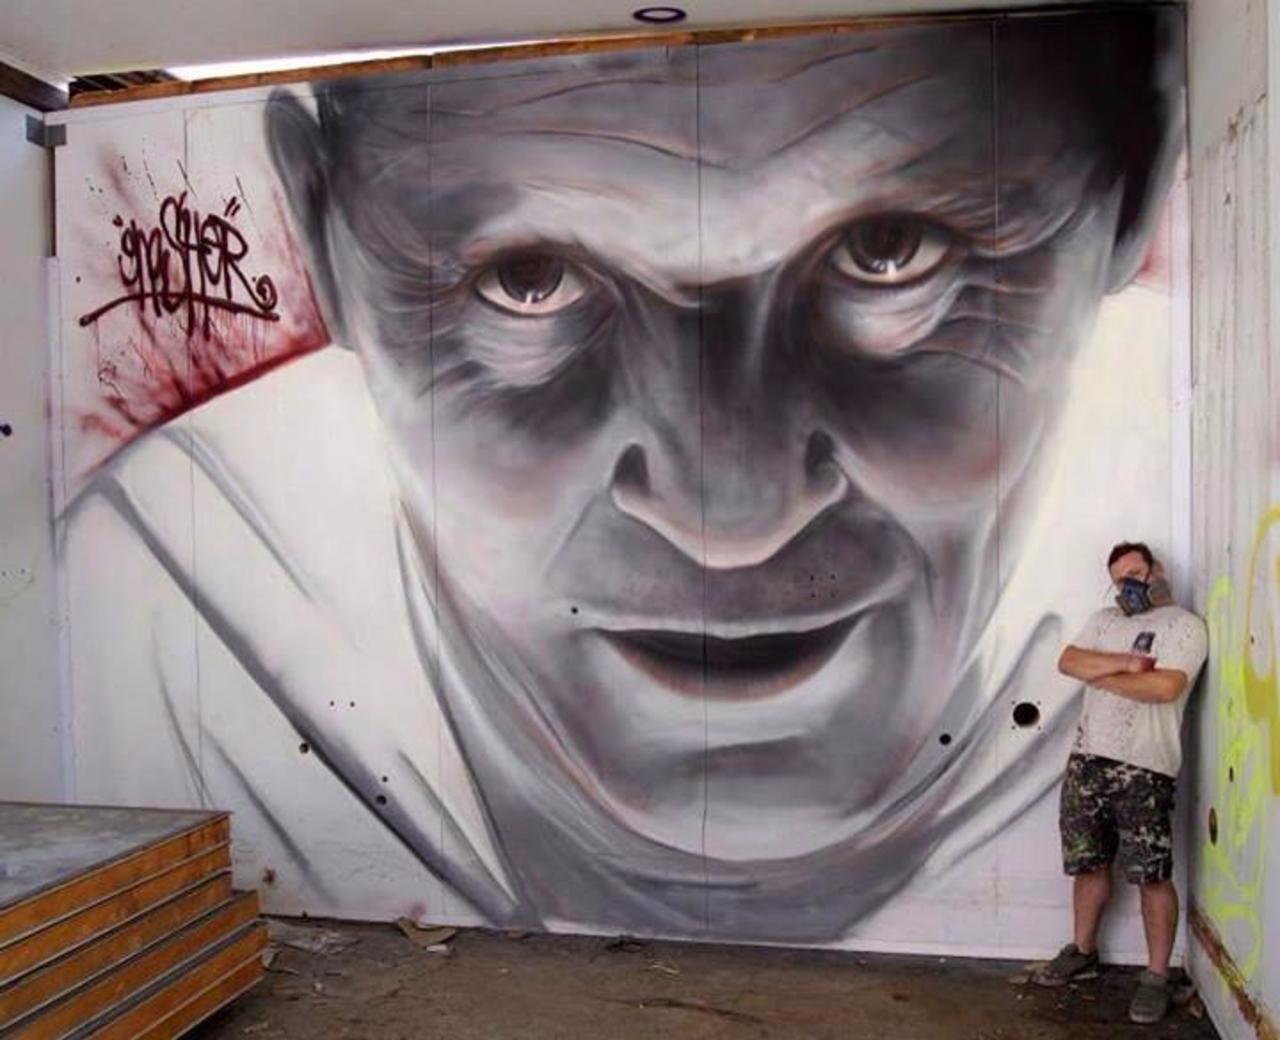 Artist @GnasherMurals new awesome Street Art portrait of Hannibal Lector #art #graffiti #mural #streetart https://t.co/lZuxdkKS4h